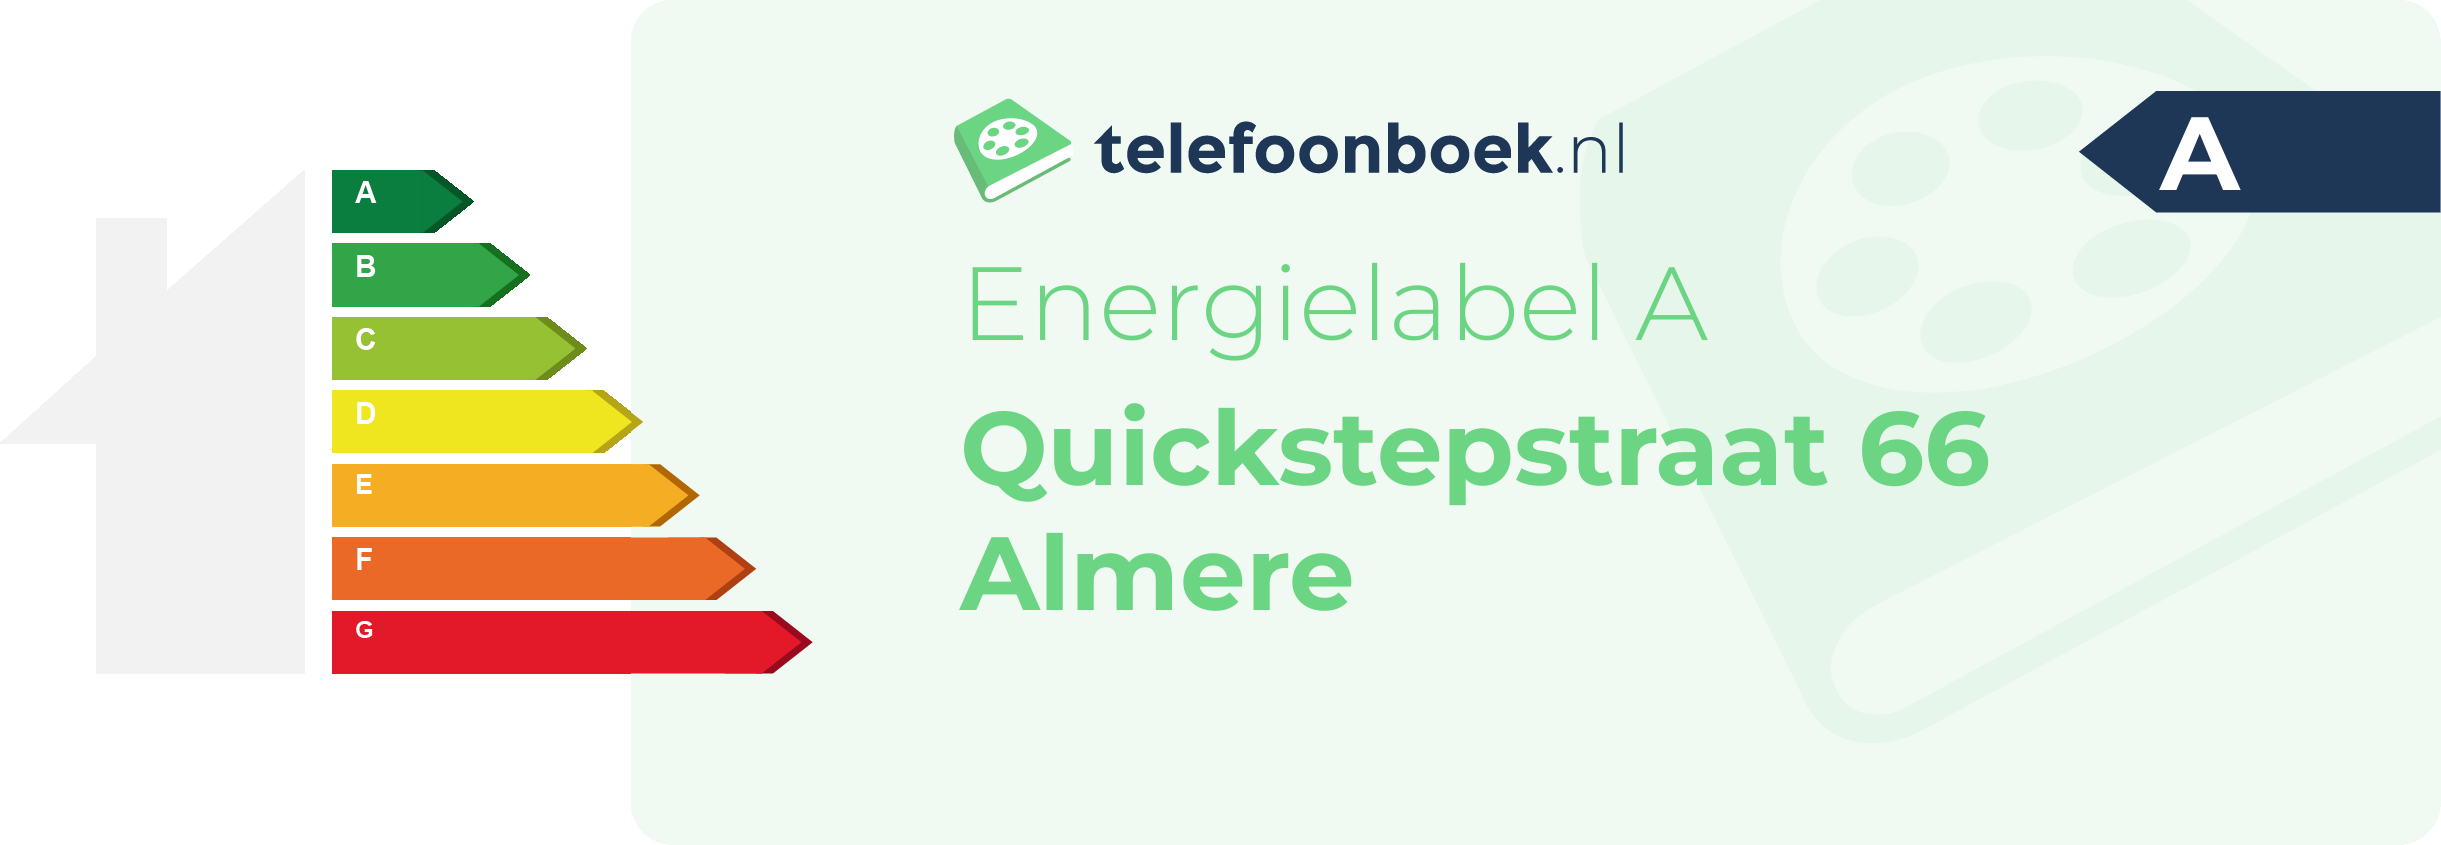 Energielabel Quickstepstraat 66 Almere